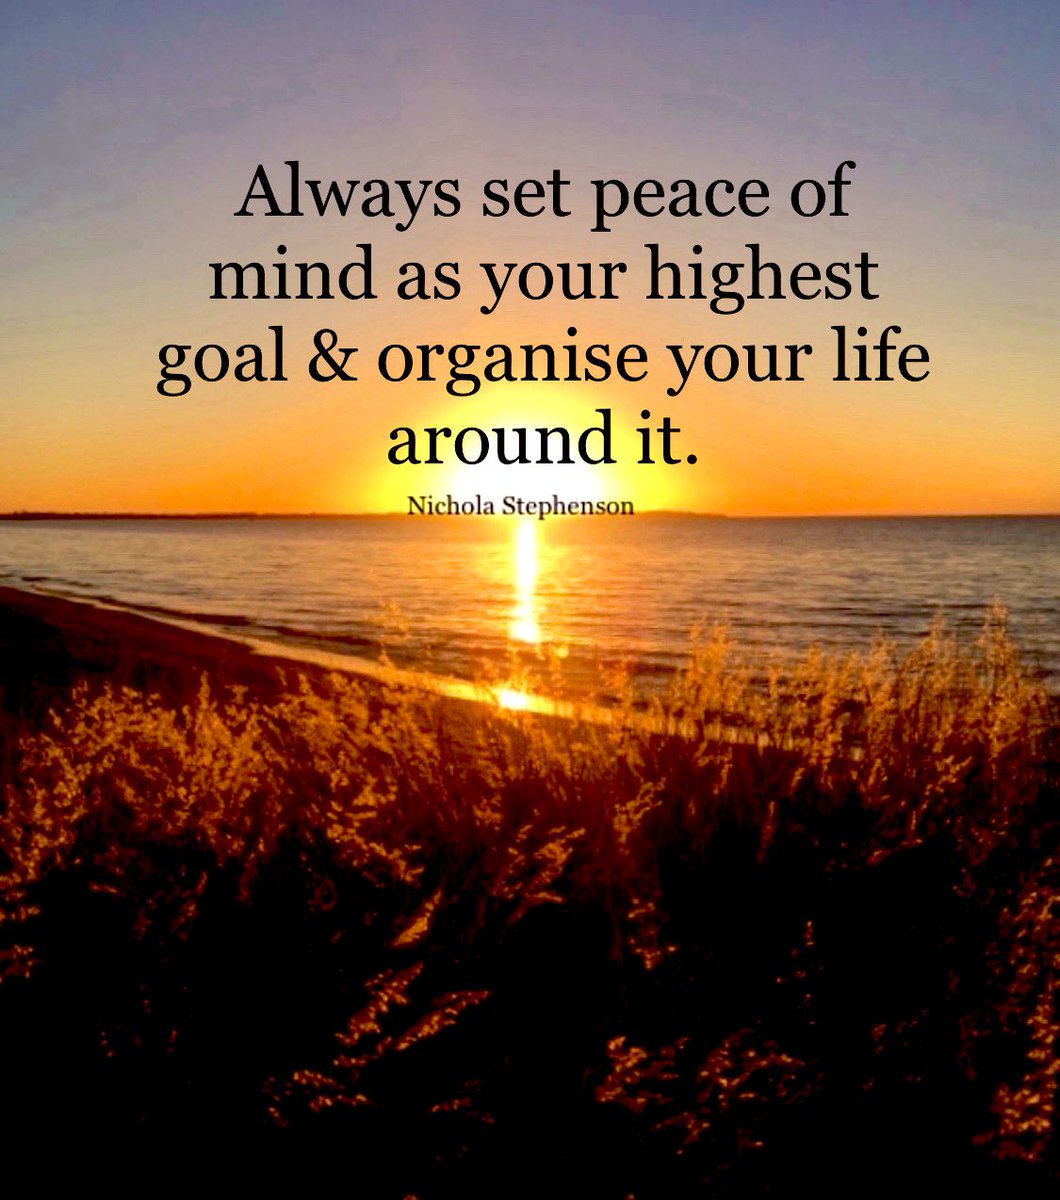 Always set peace of mind as your highest goal & organise your life around it
☮️

#positive #mentalhealth #mindset #joytrain #successtrain #thinkbigsundaywithmarsha #thrivetogether #peace